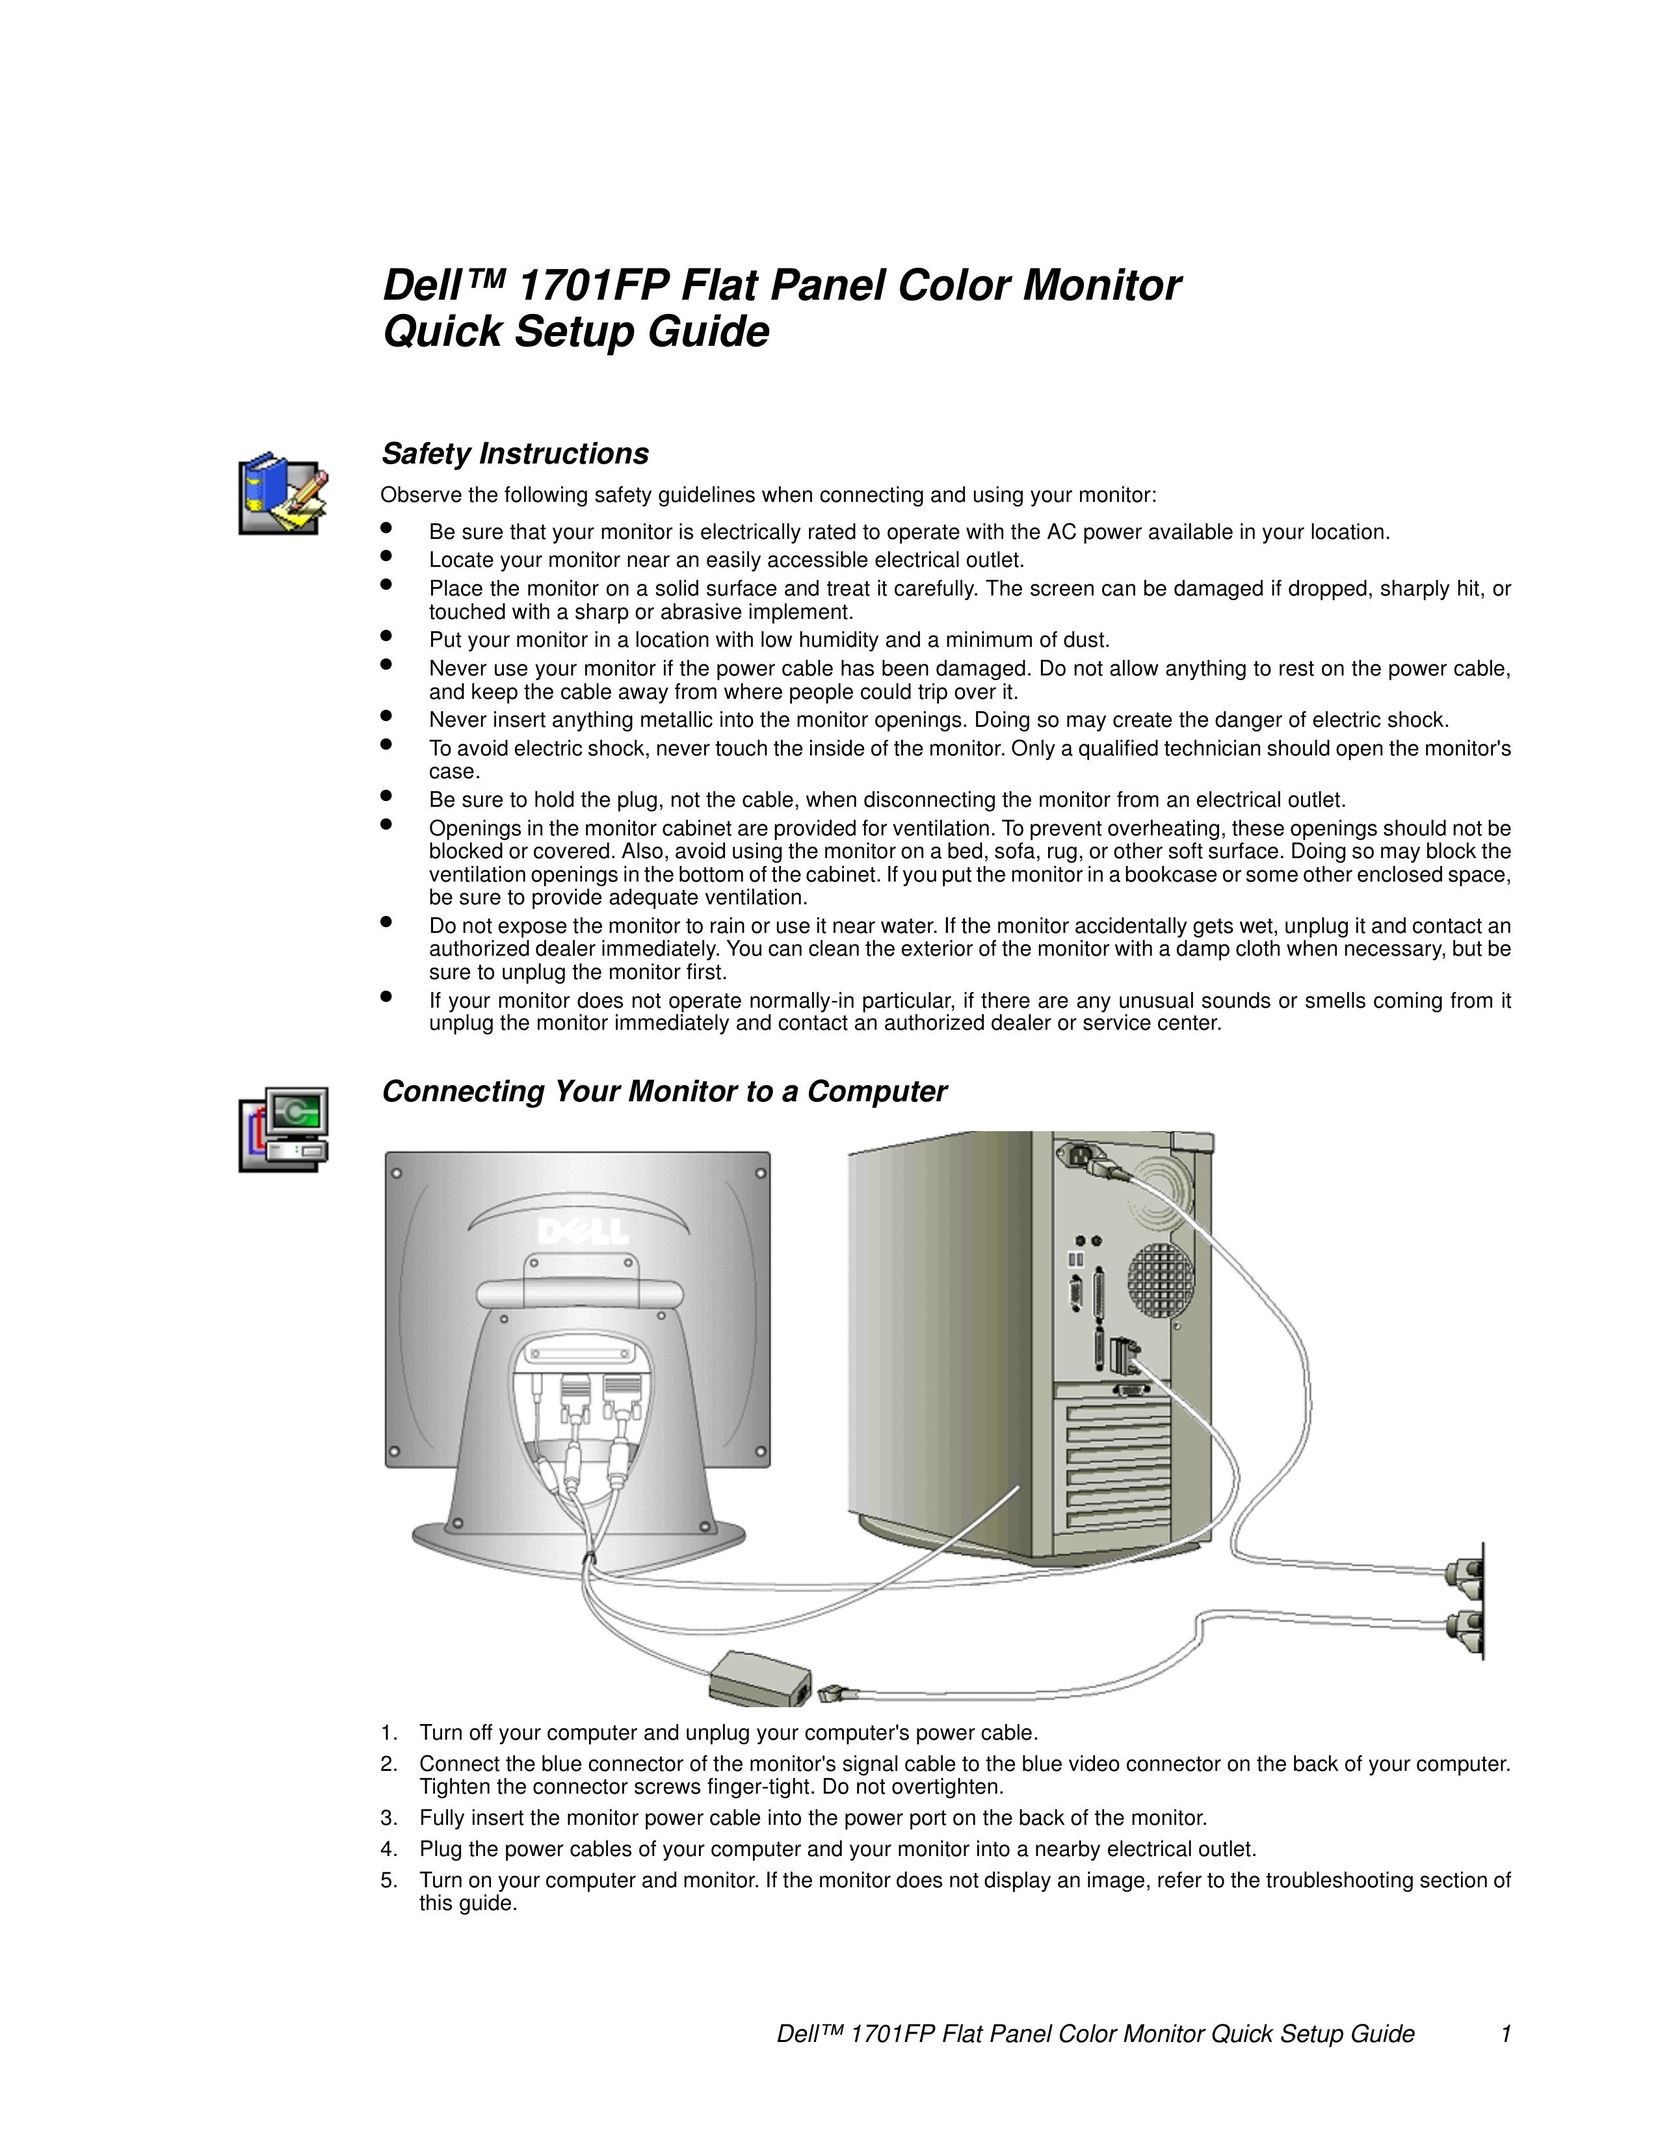 Dell 1701FP Computer Monitor User Manual